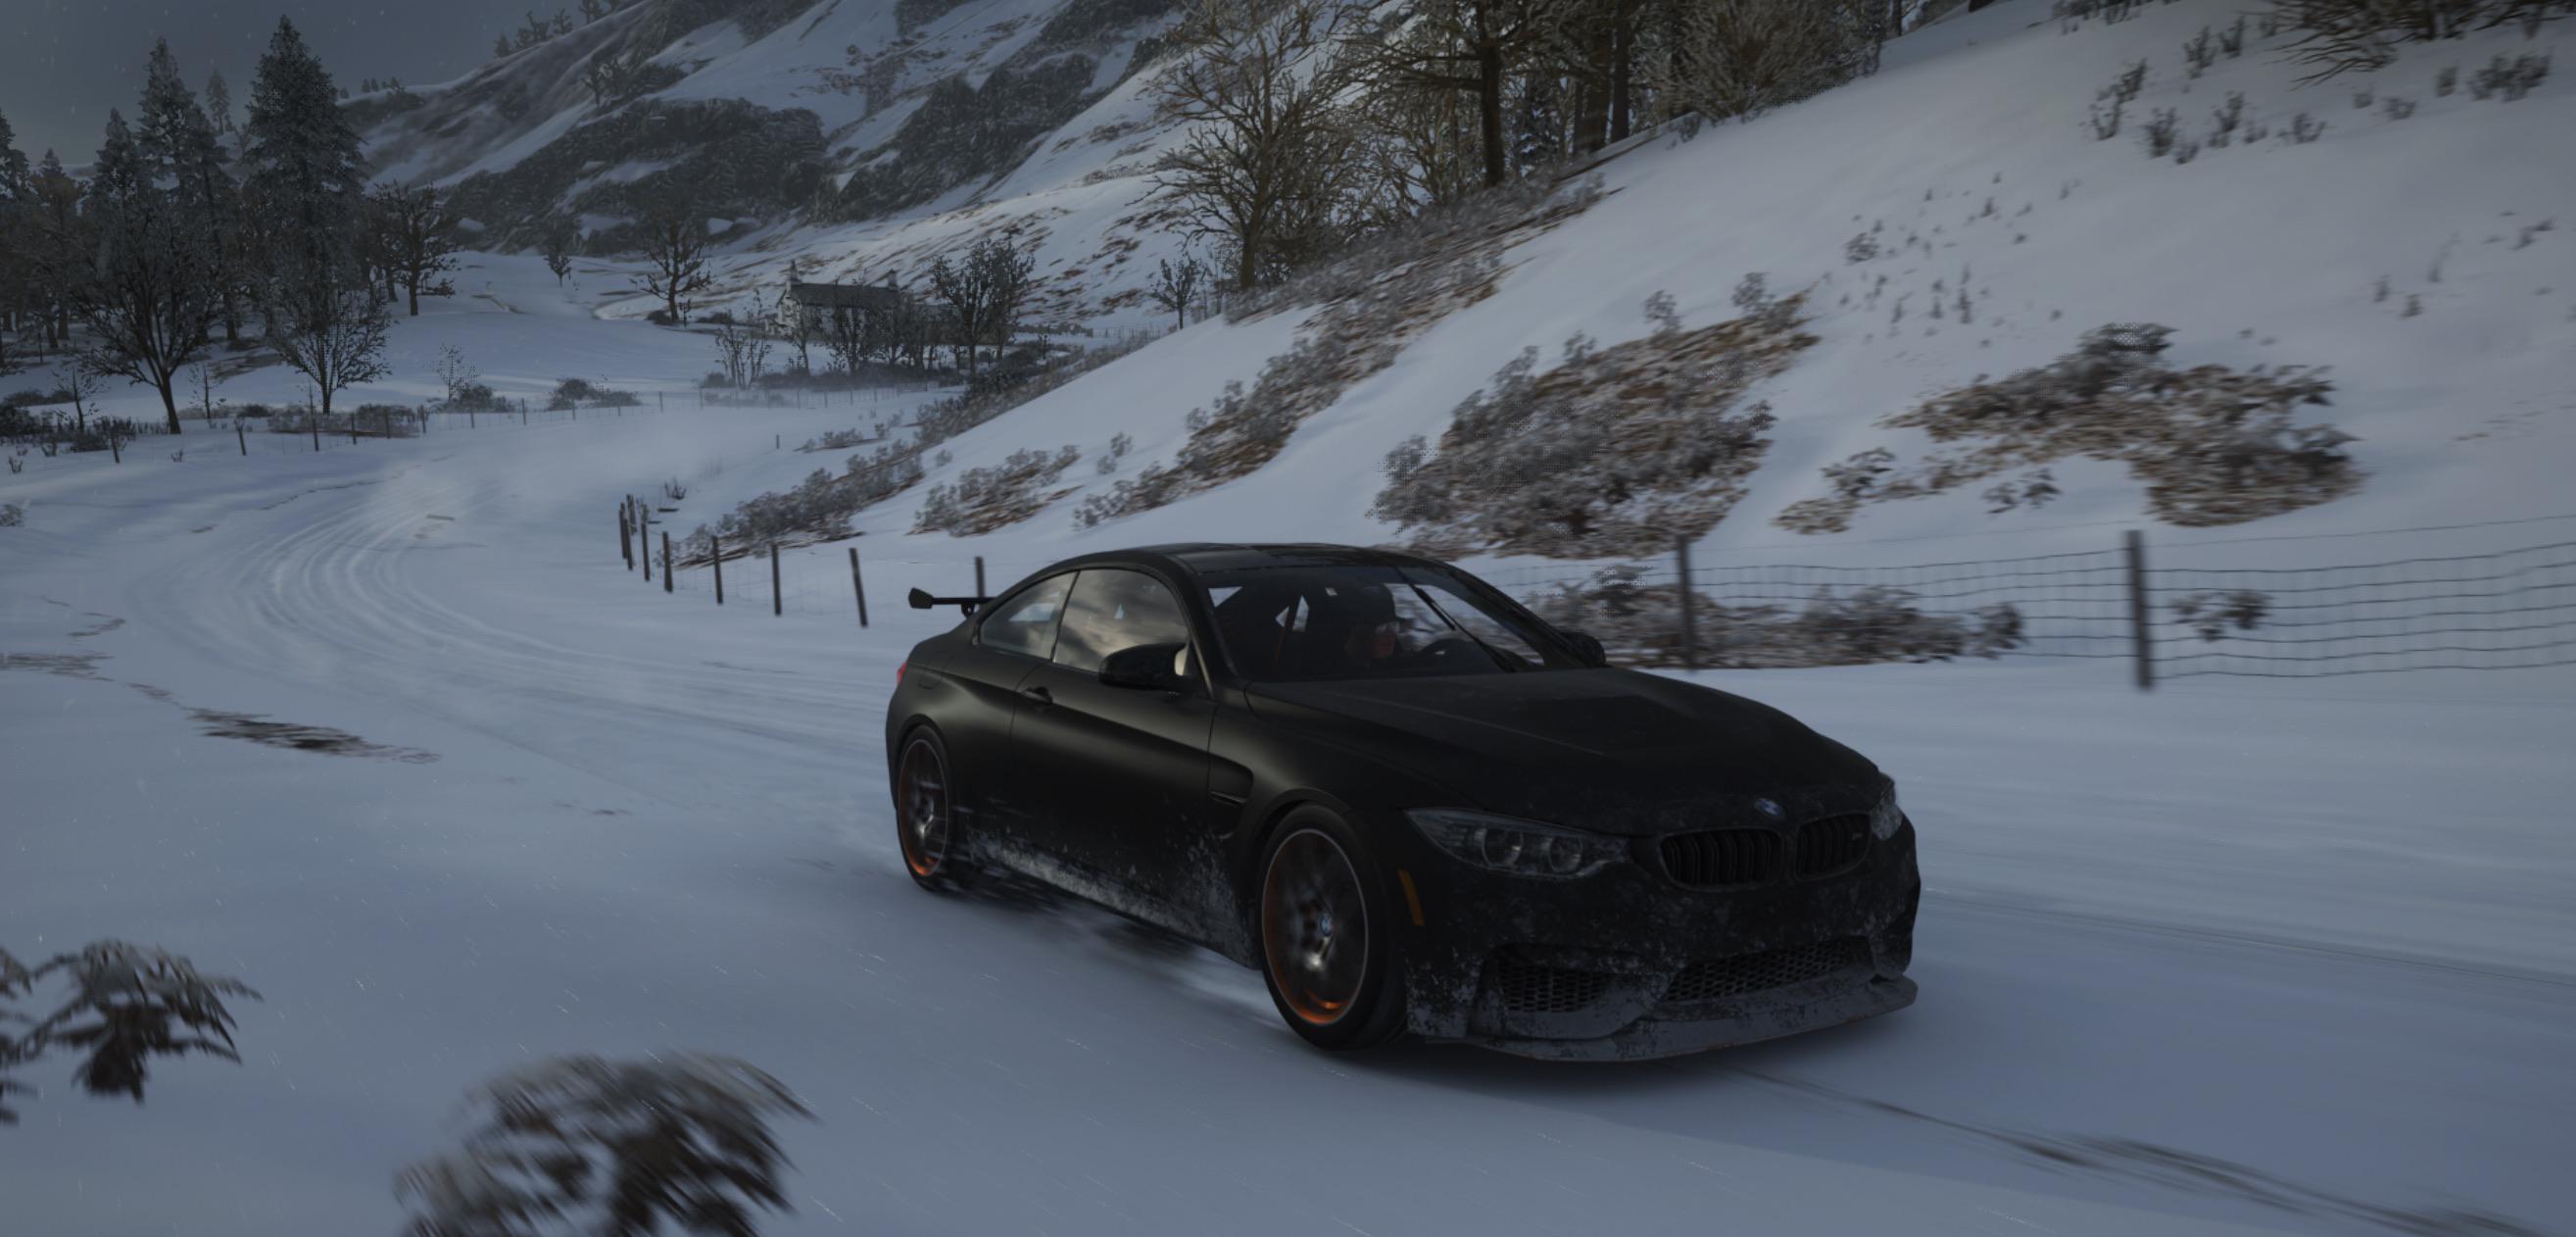 BMW M4 GTS via Forza Horizon 4 taken